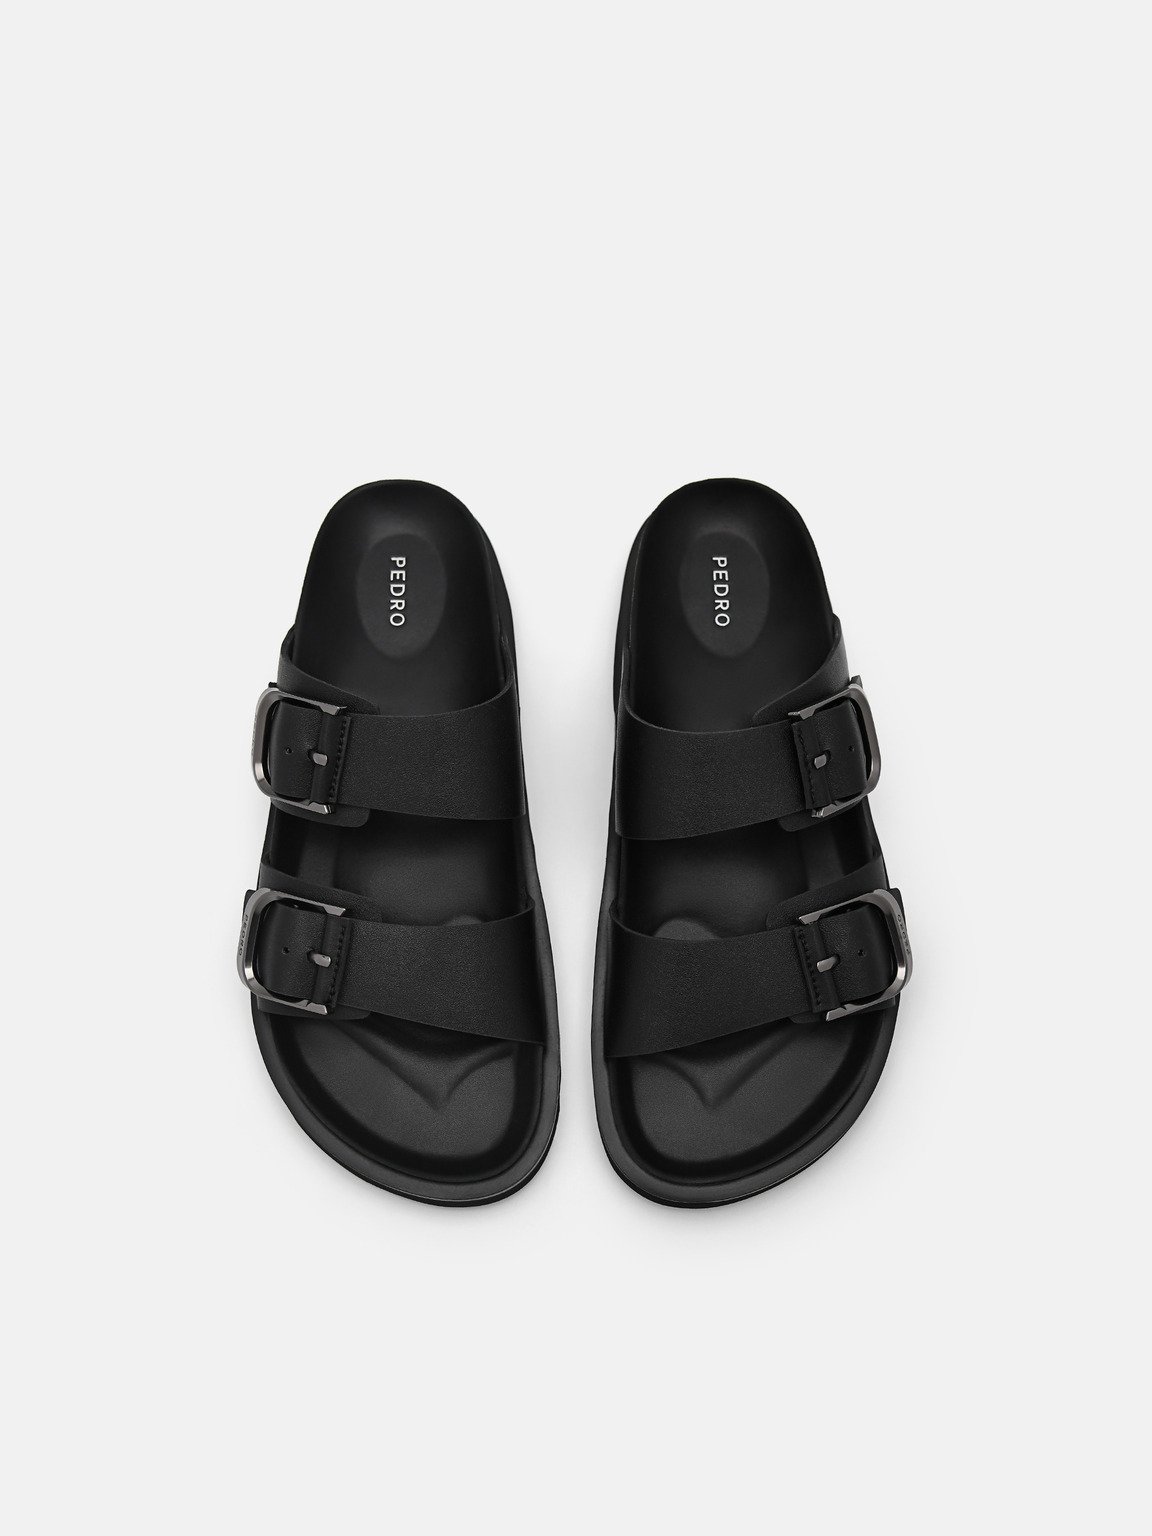 Women's Helix Sandals, Black